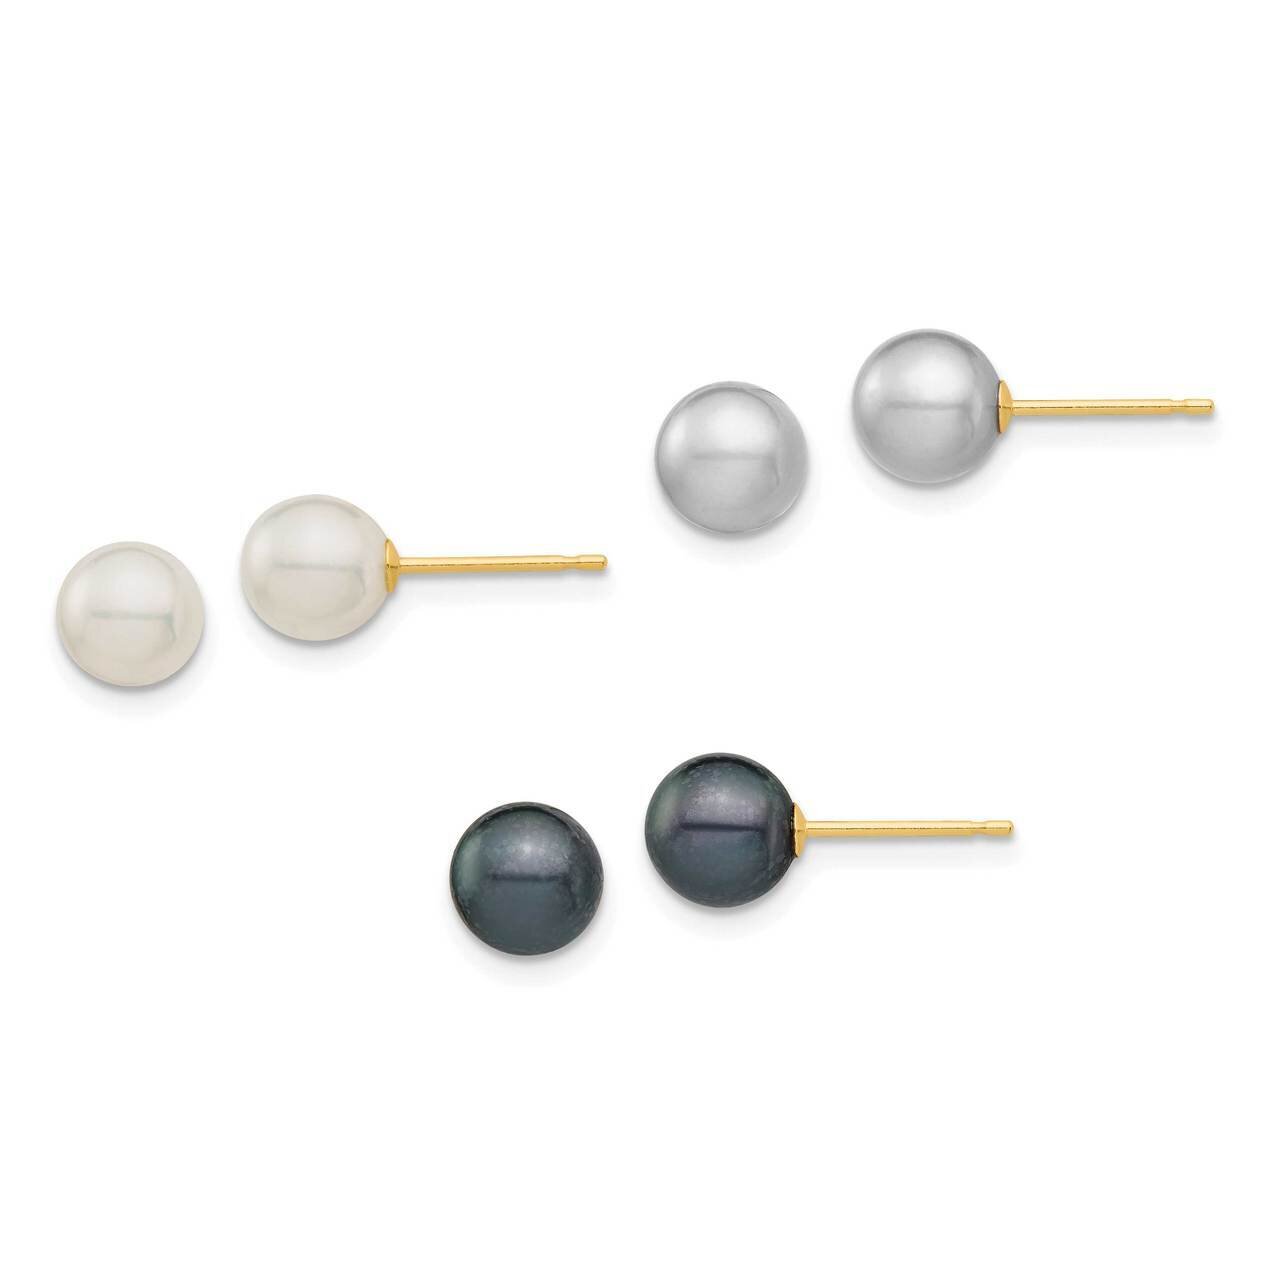 6-6.5mm White/Grey/Black Round Freshwater Cultured Pearl 3 pair Stud Post Earrings Set 14k Gold XF691ESET